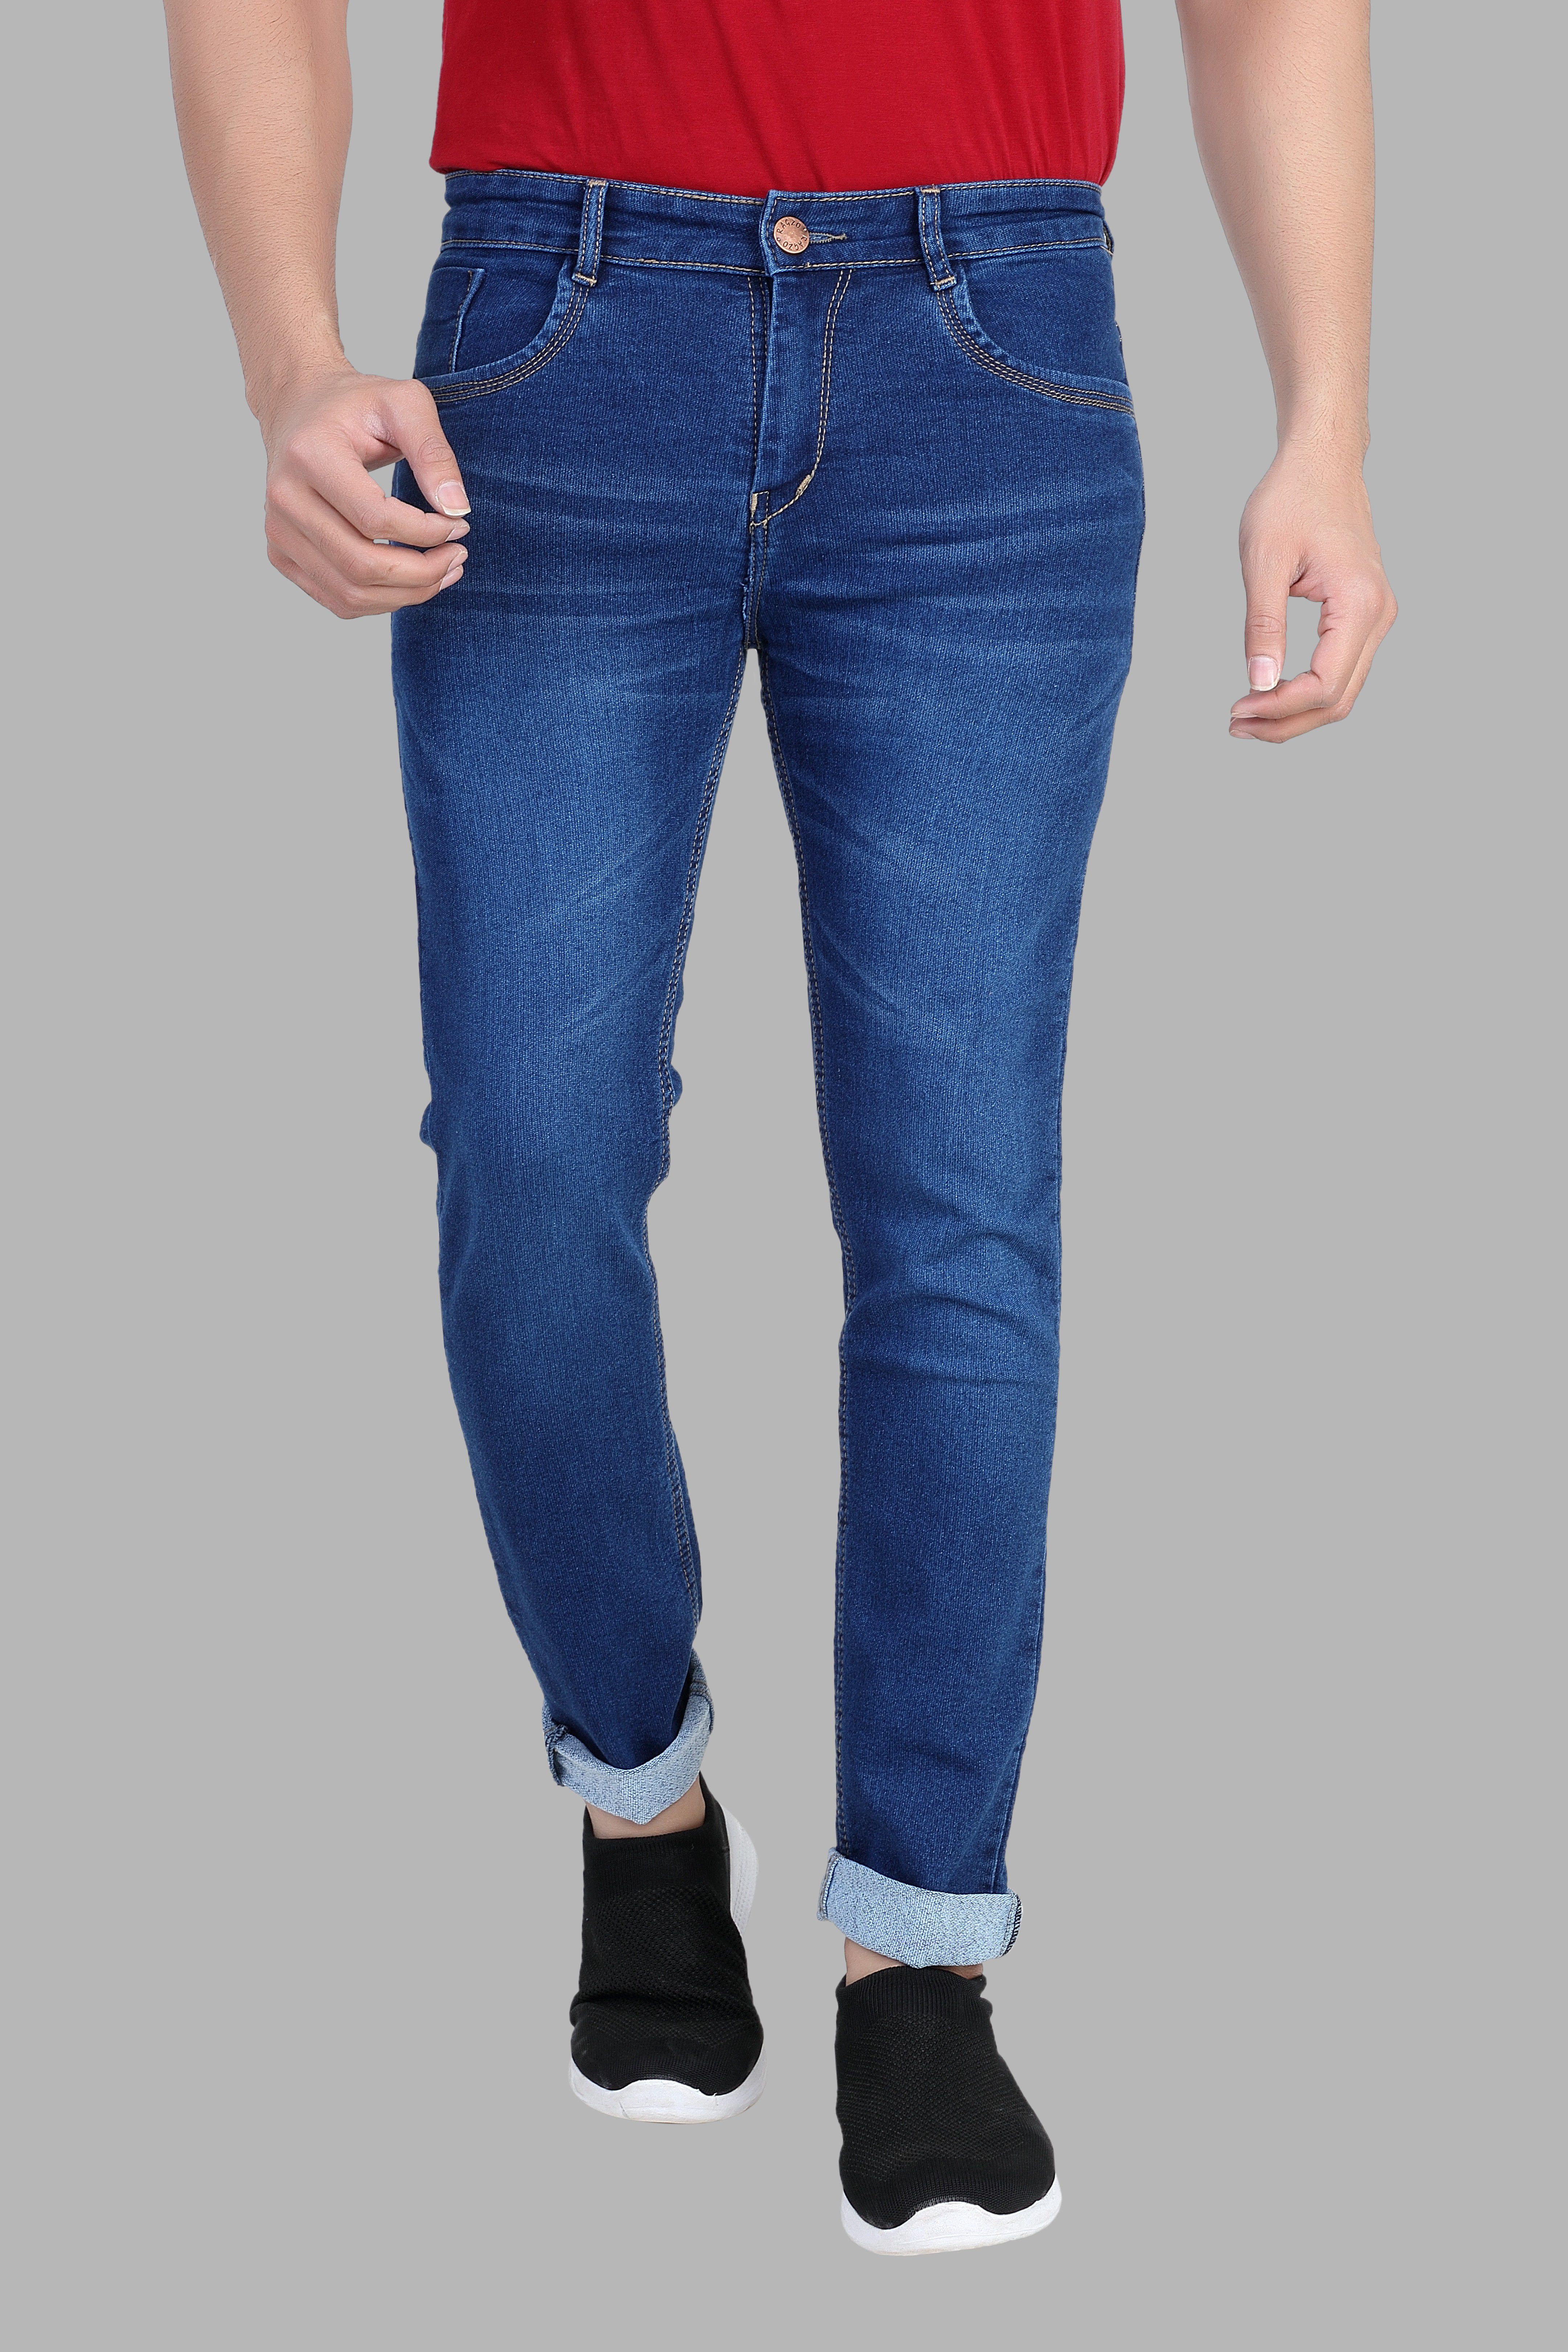 RAGZO - Blue Denim Slim Fit Men's Jeans ( Pack of 1 )